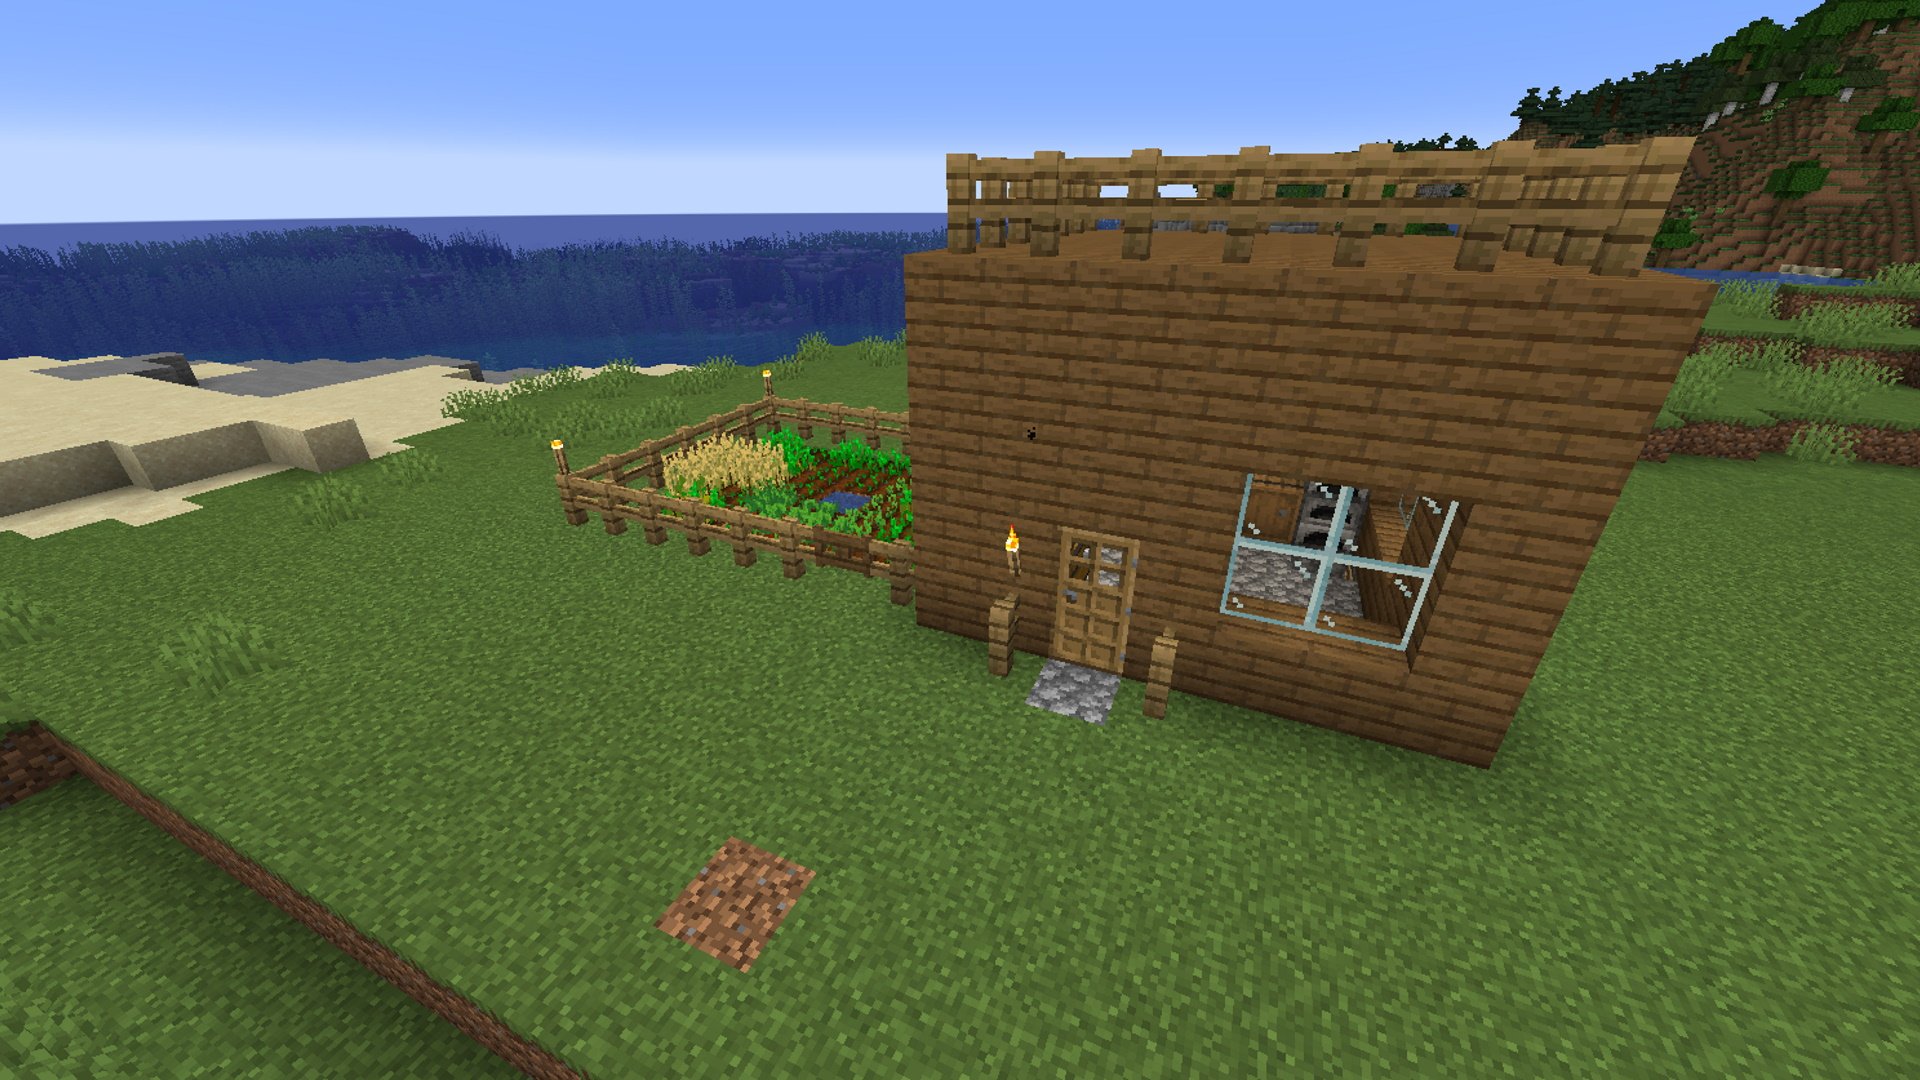 Minecraft house - a luxurious minecraft house with a garden